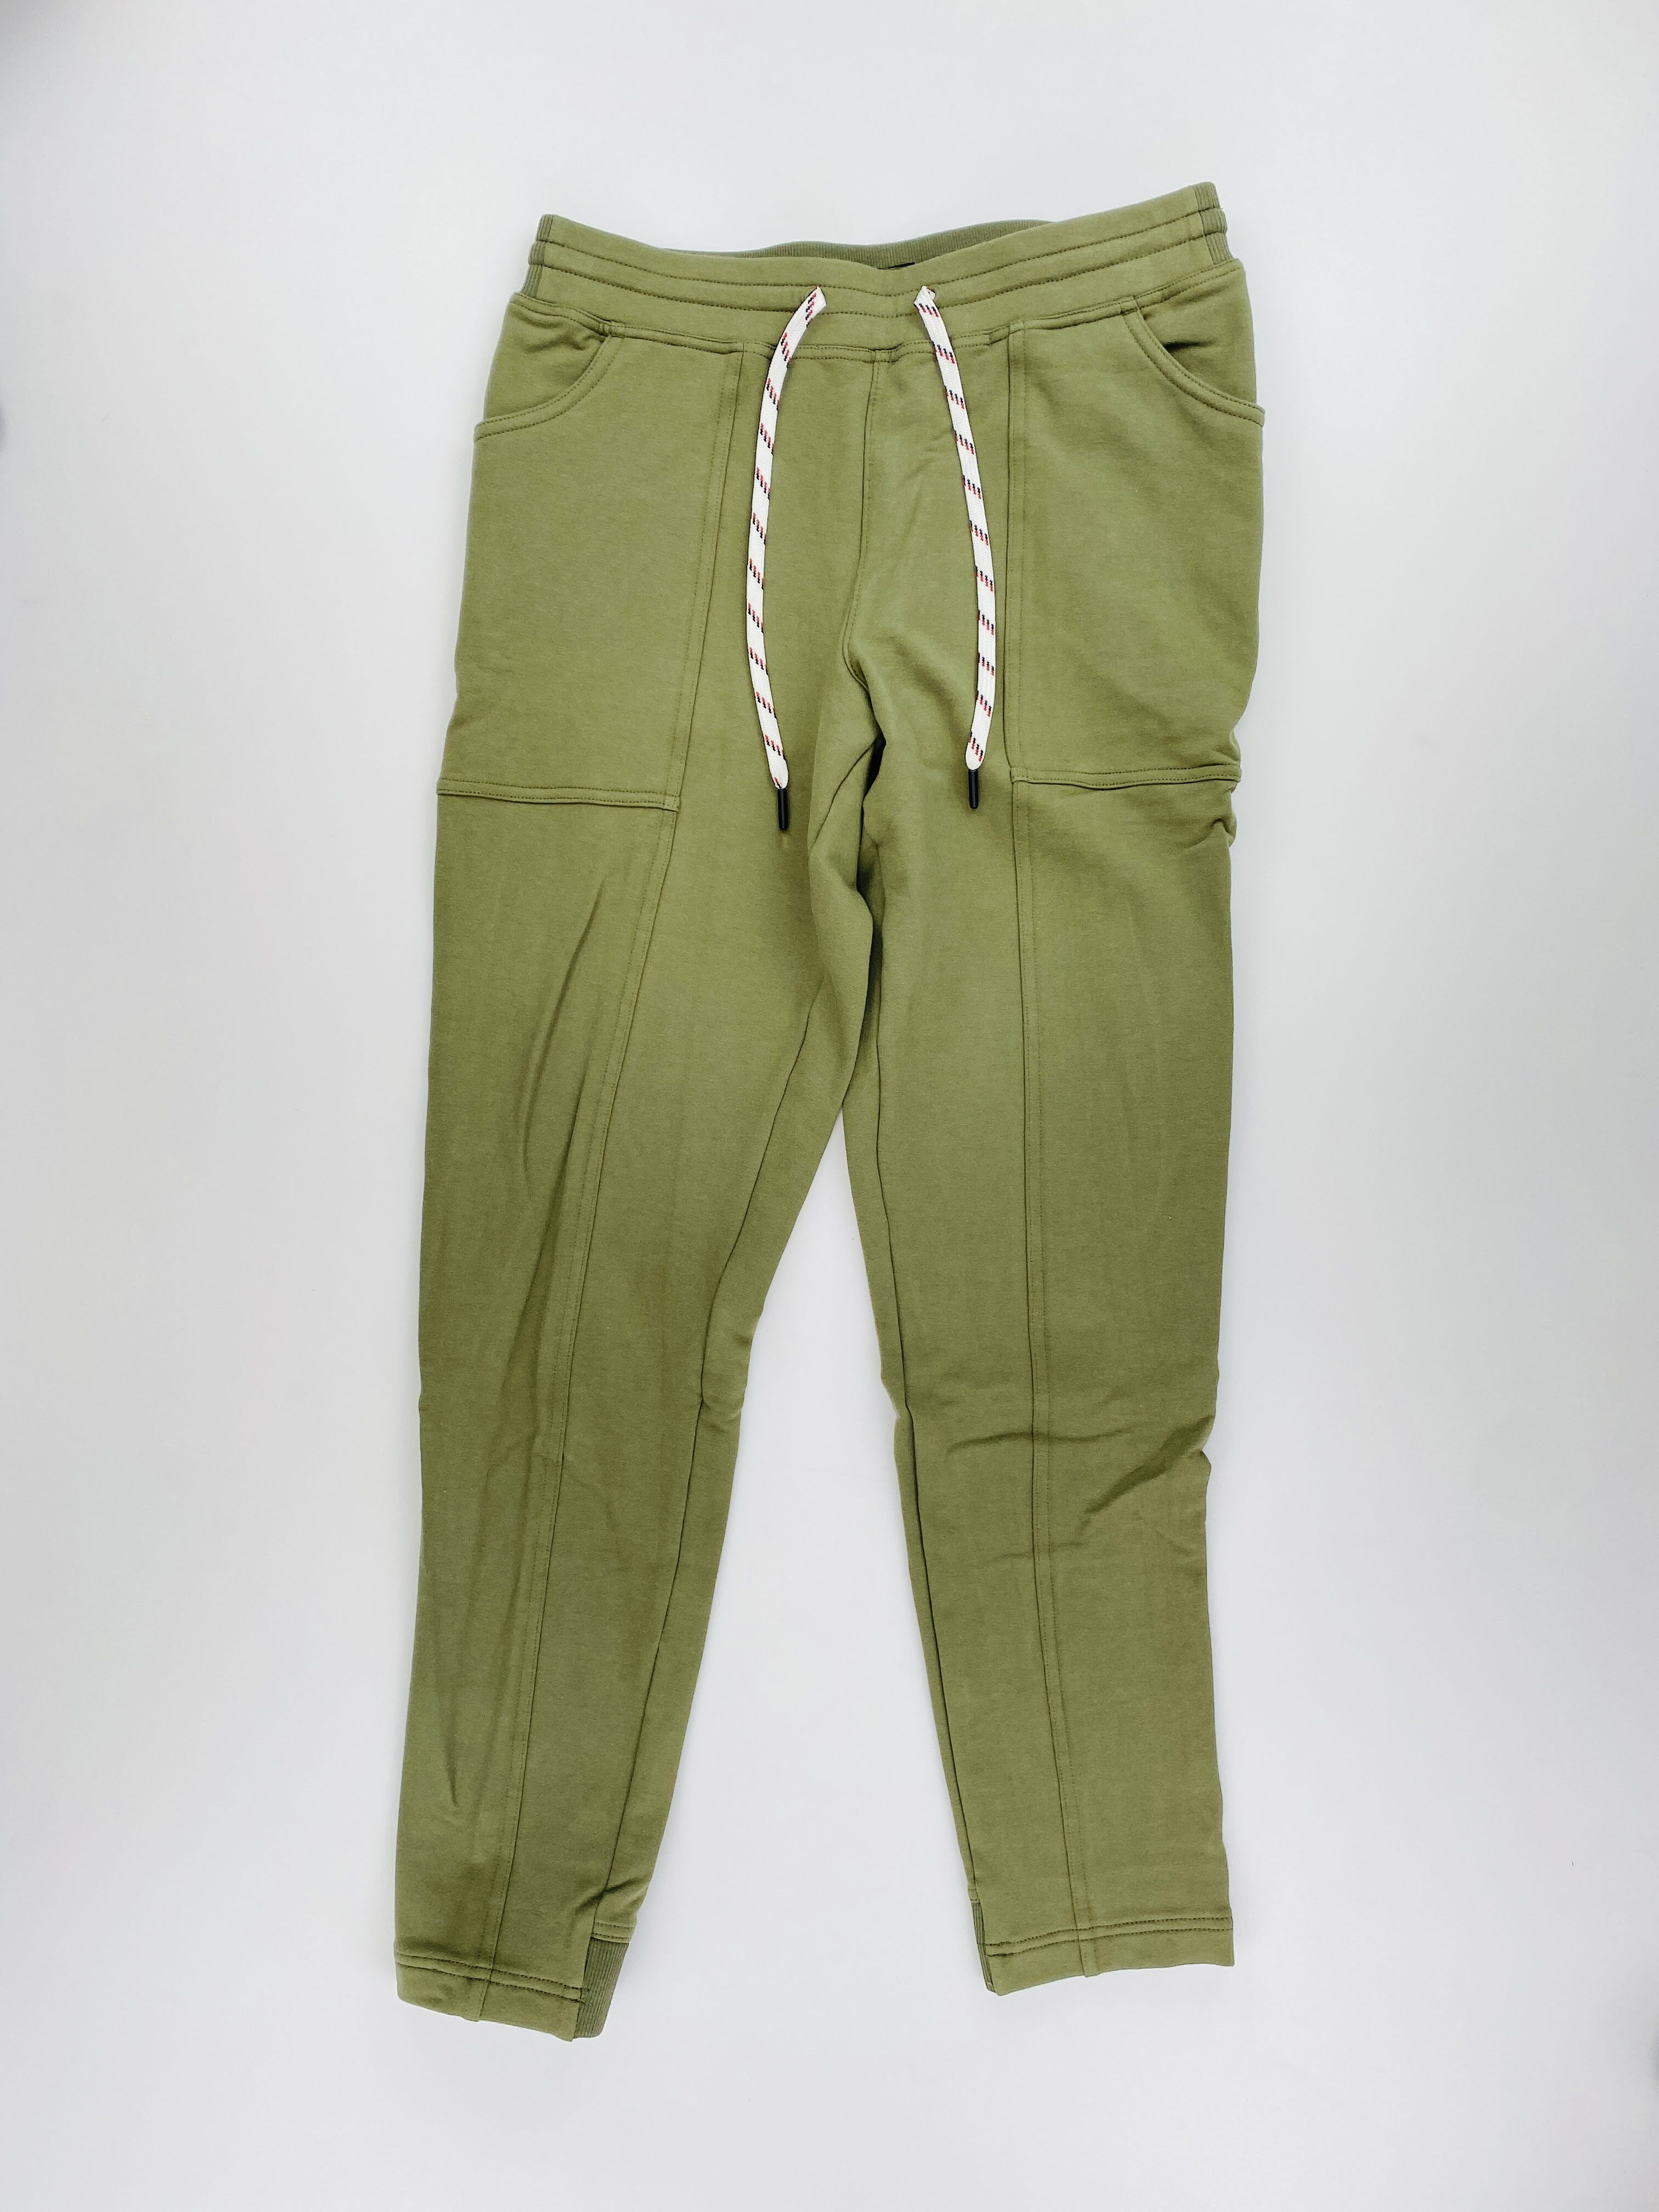 Wrangler Athleisure Pants - Seconde main Pantalon randonnée femme - Vert olive - US 28 | Hardloop